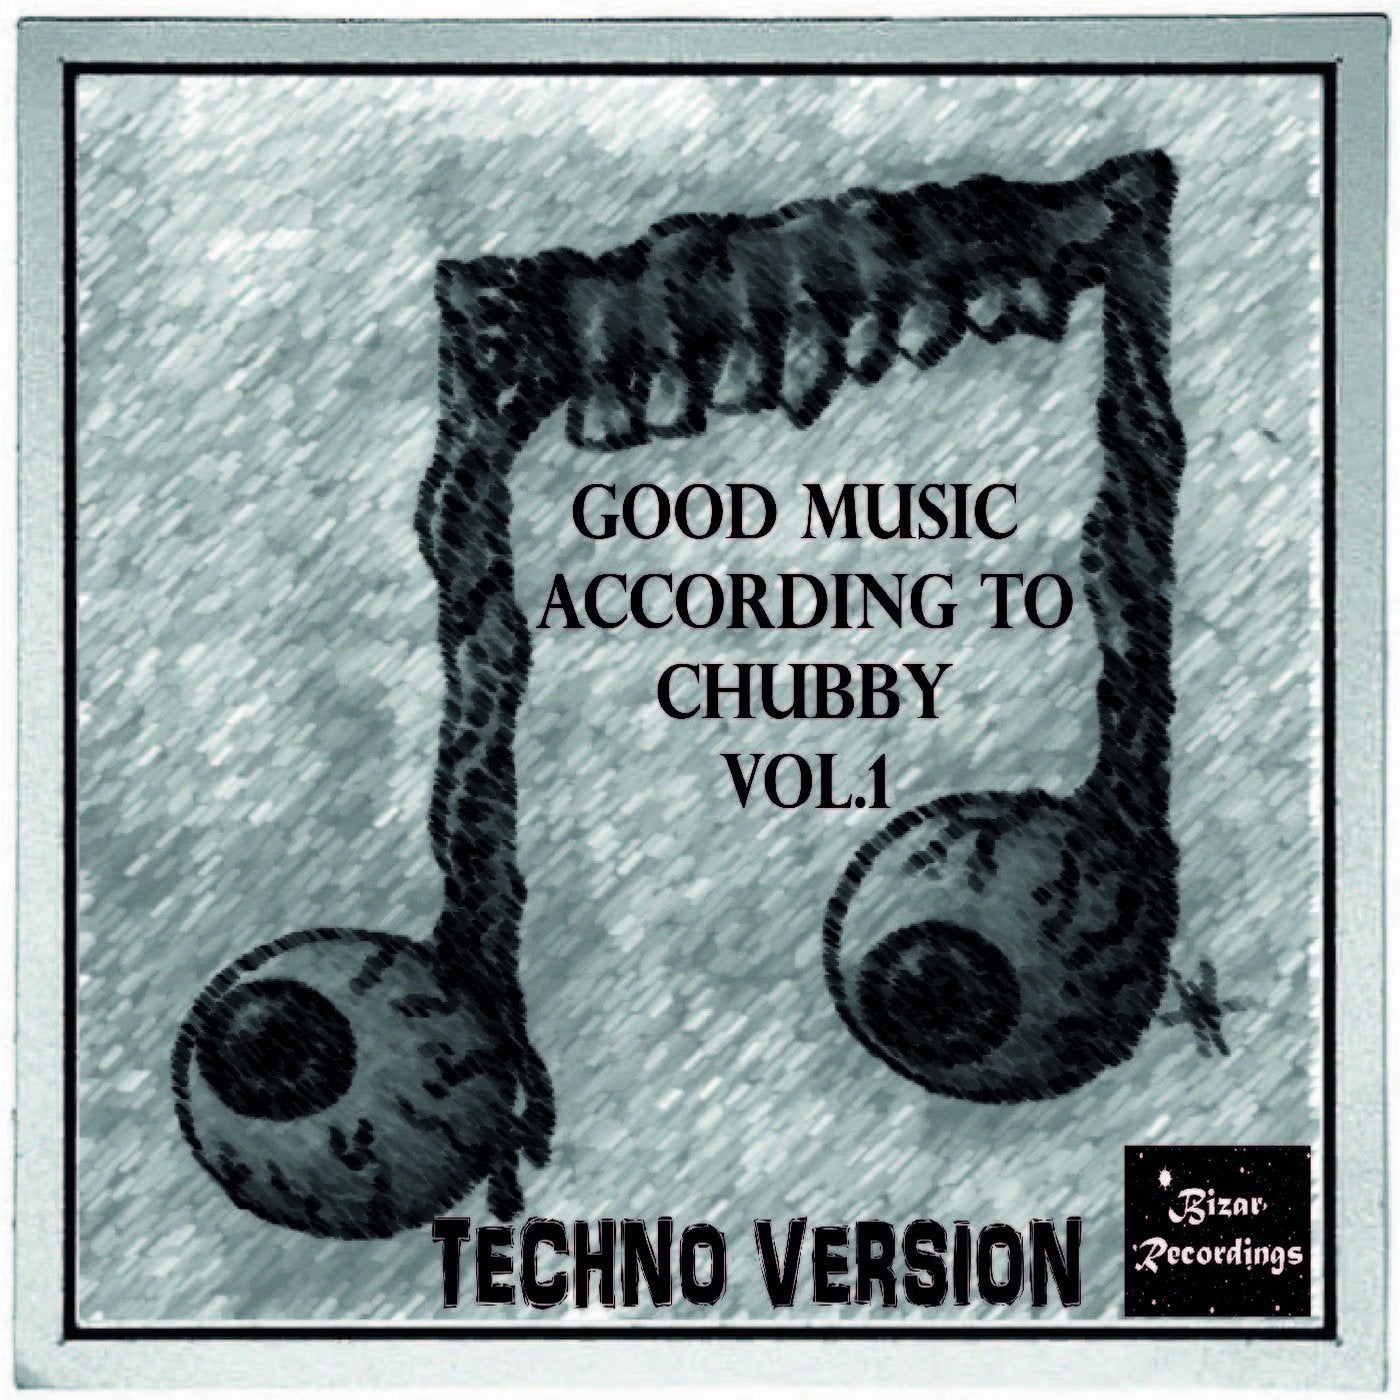 Good Music According To Chubby, Vol. 1